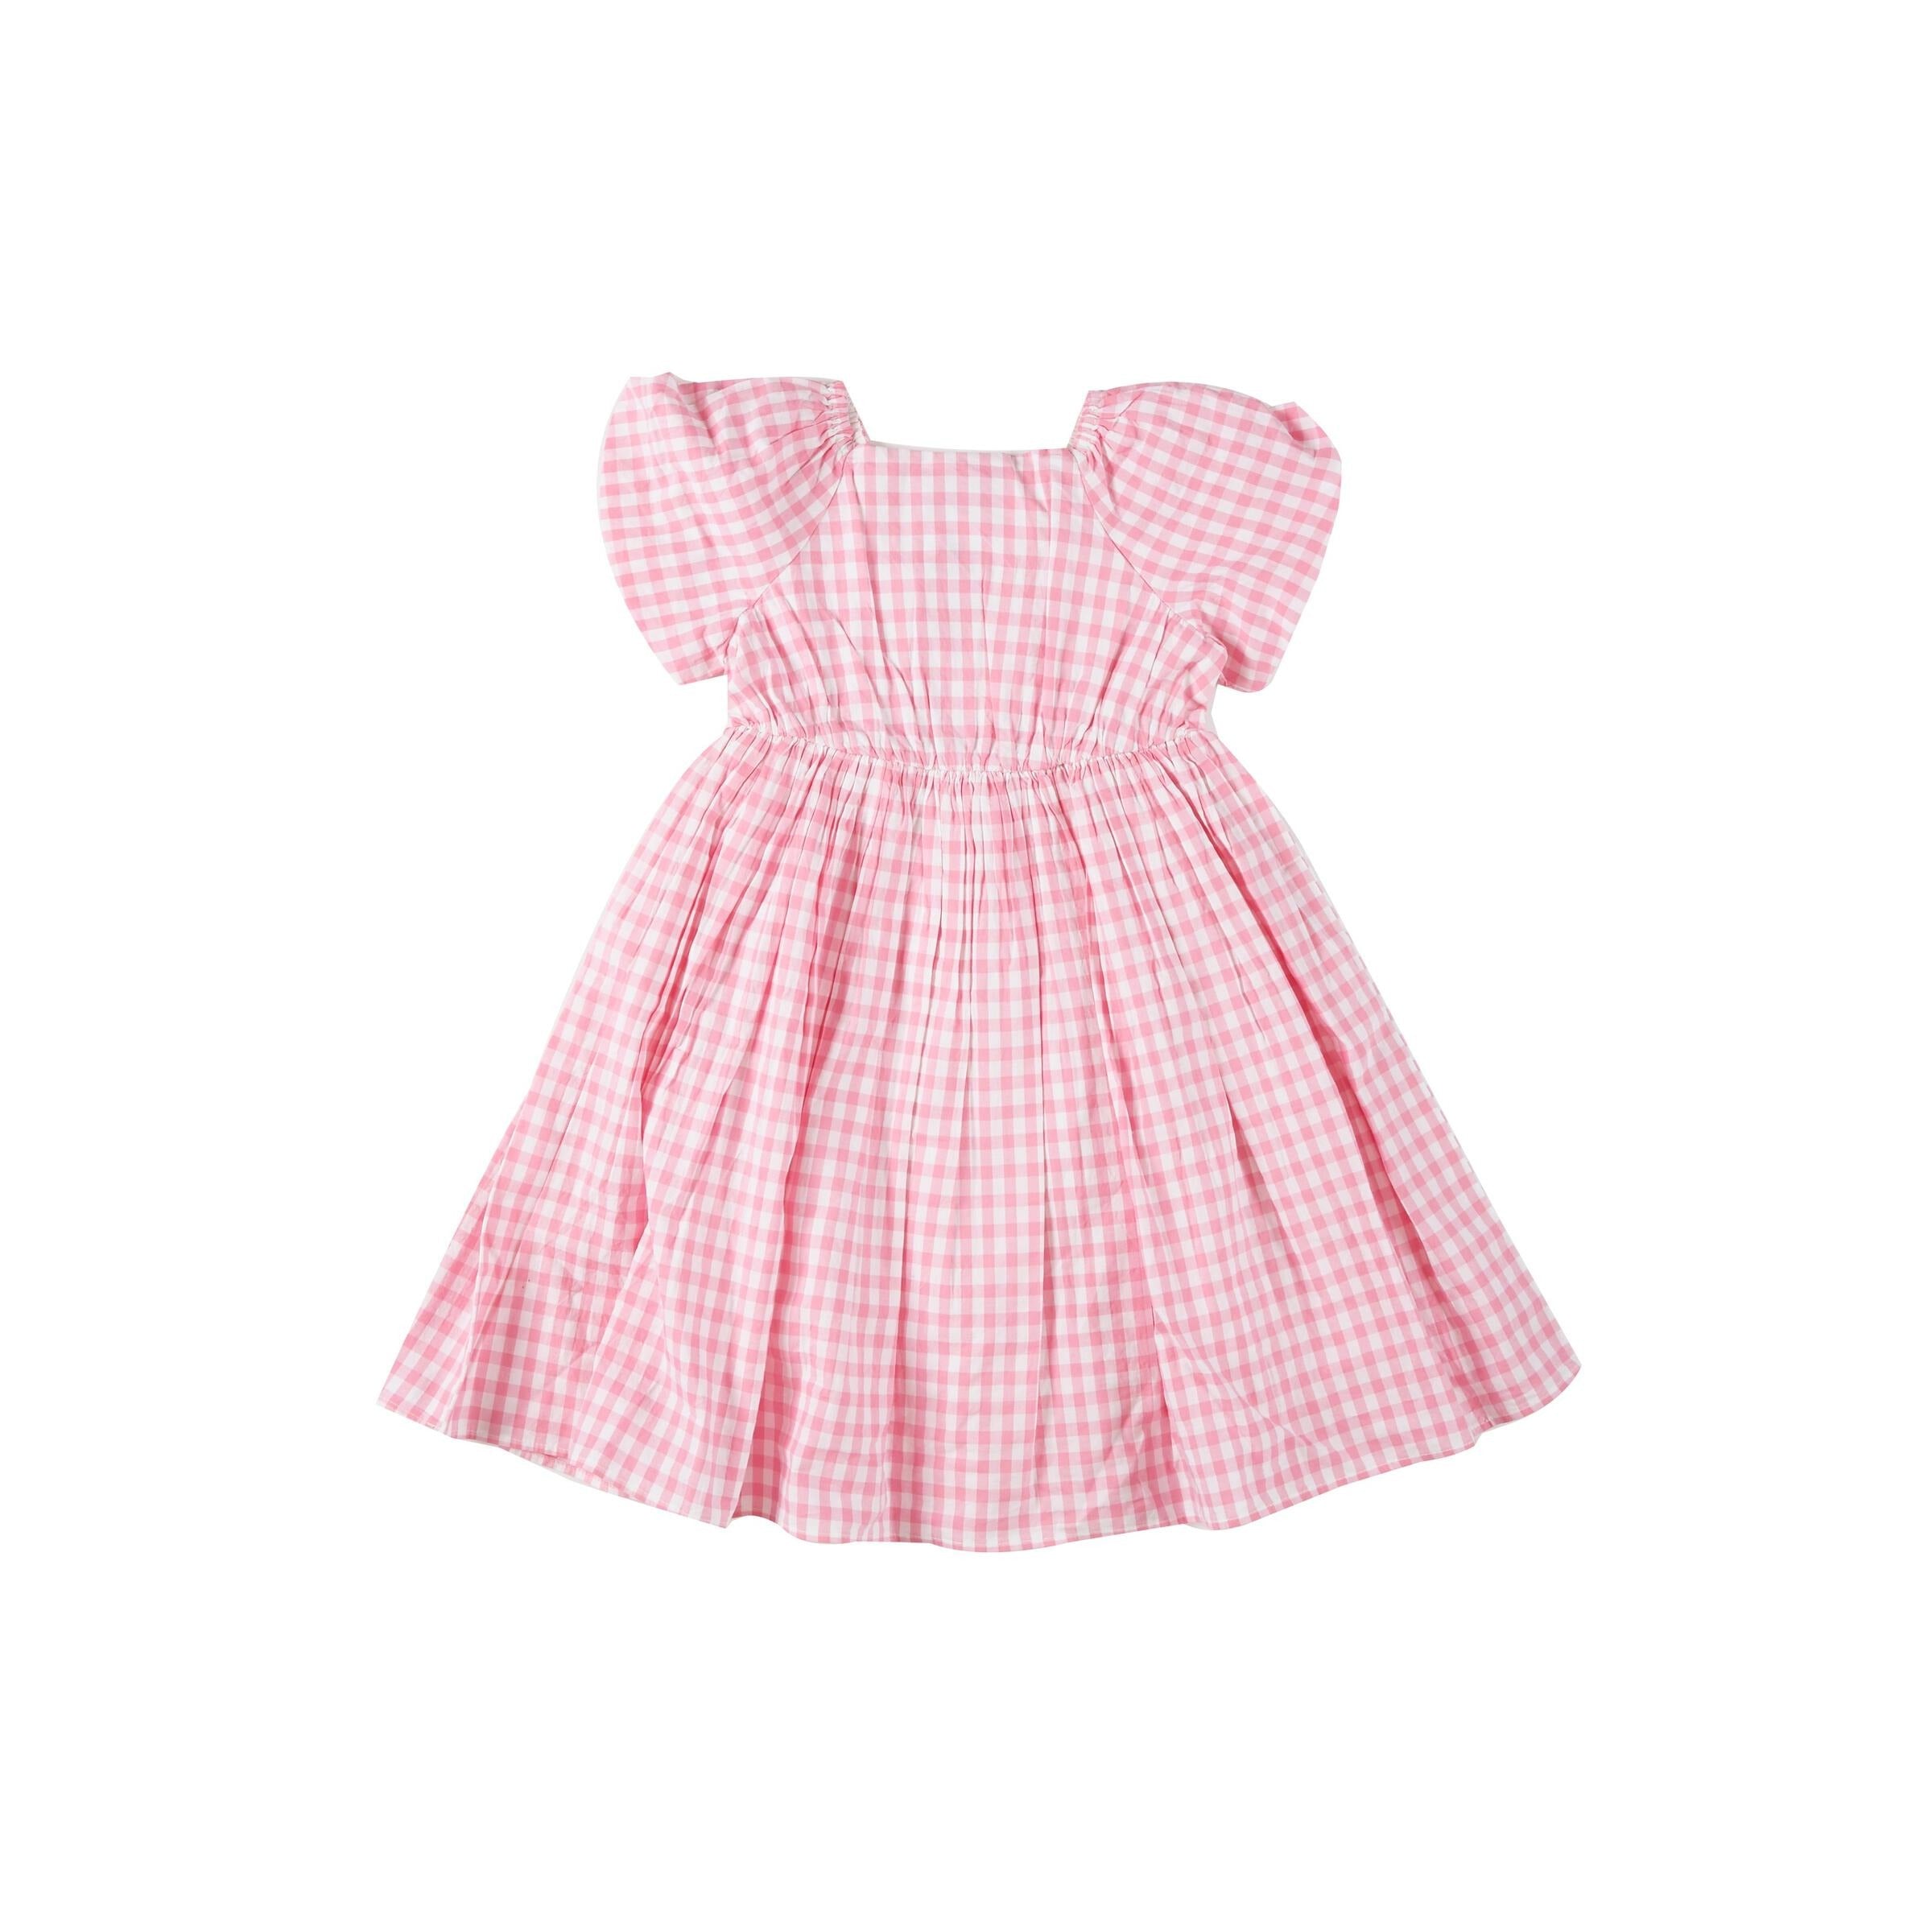 Jubilee Dress - Pink Gingham